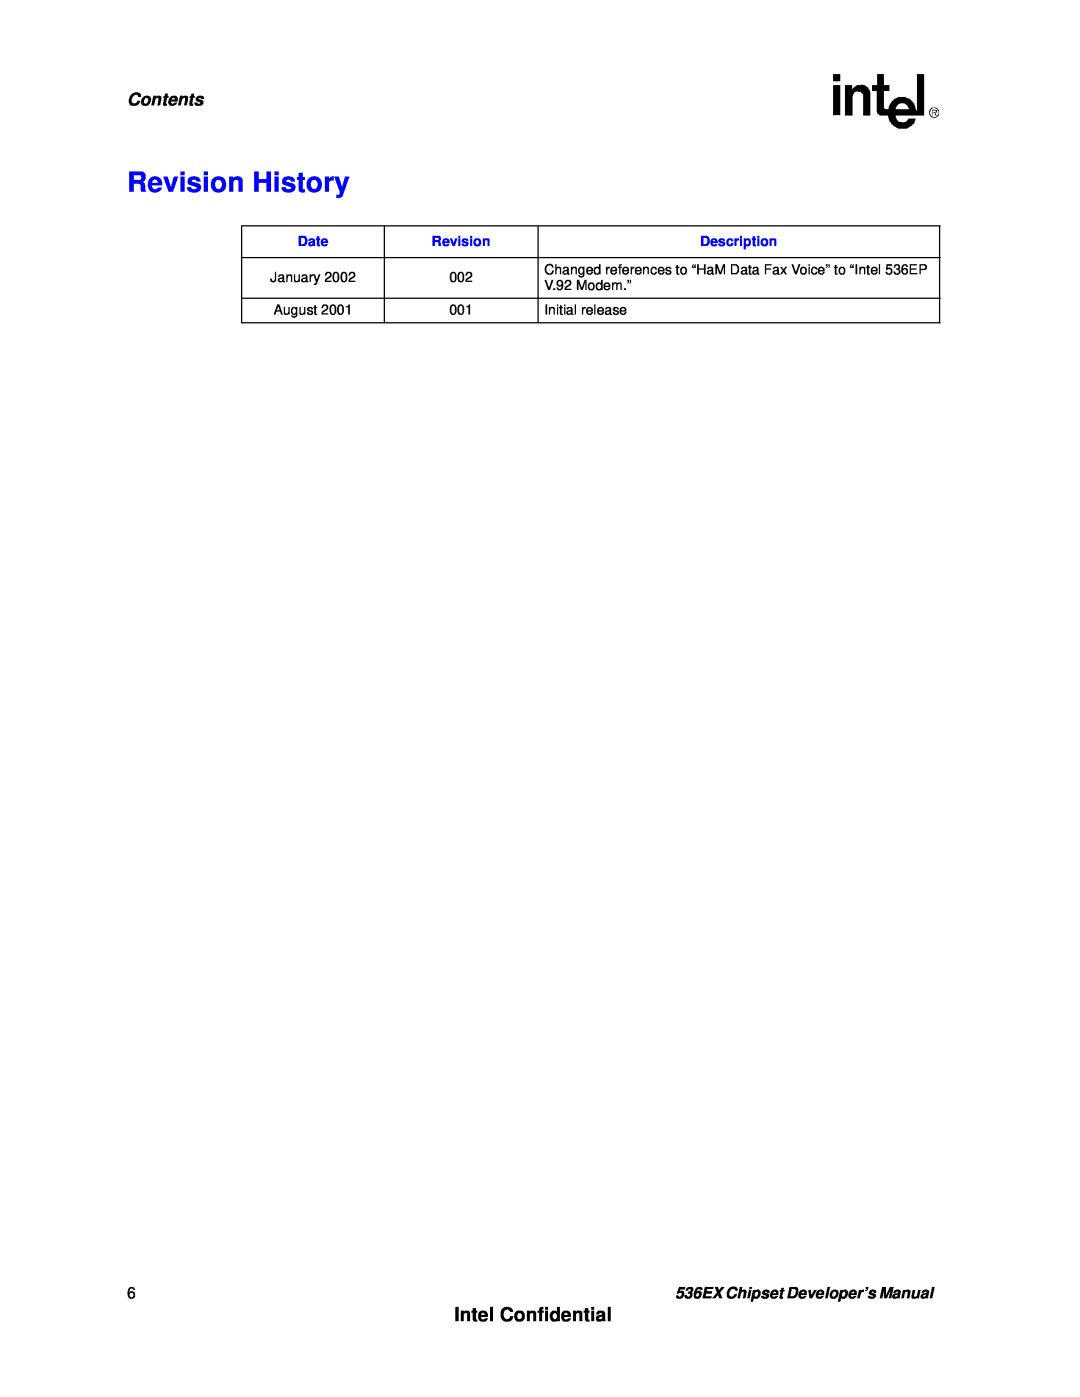 Intel manual Revision History, Intel Confidential, Contents, Date, Description, 536EX Chipset Developer’s Manual 